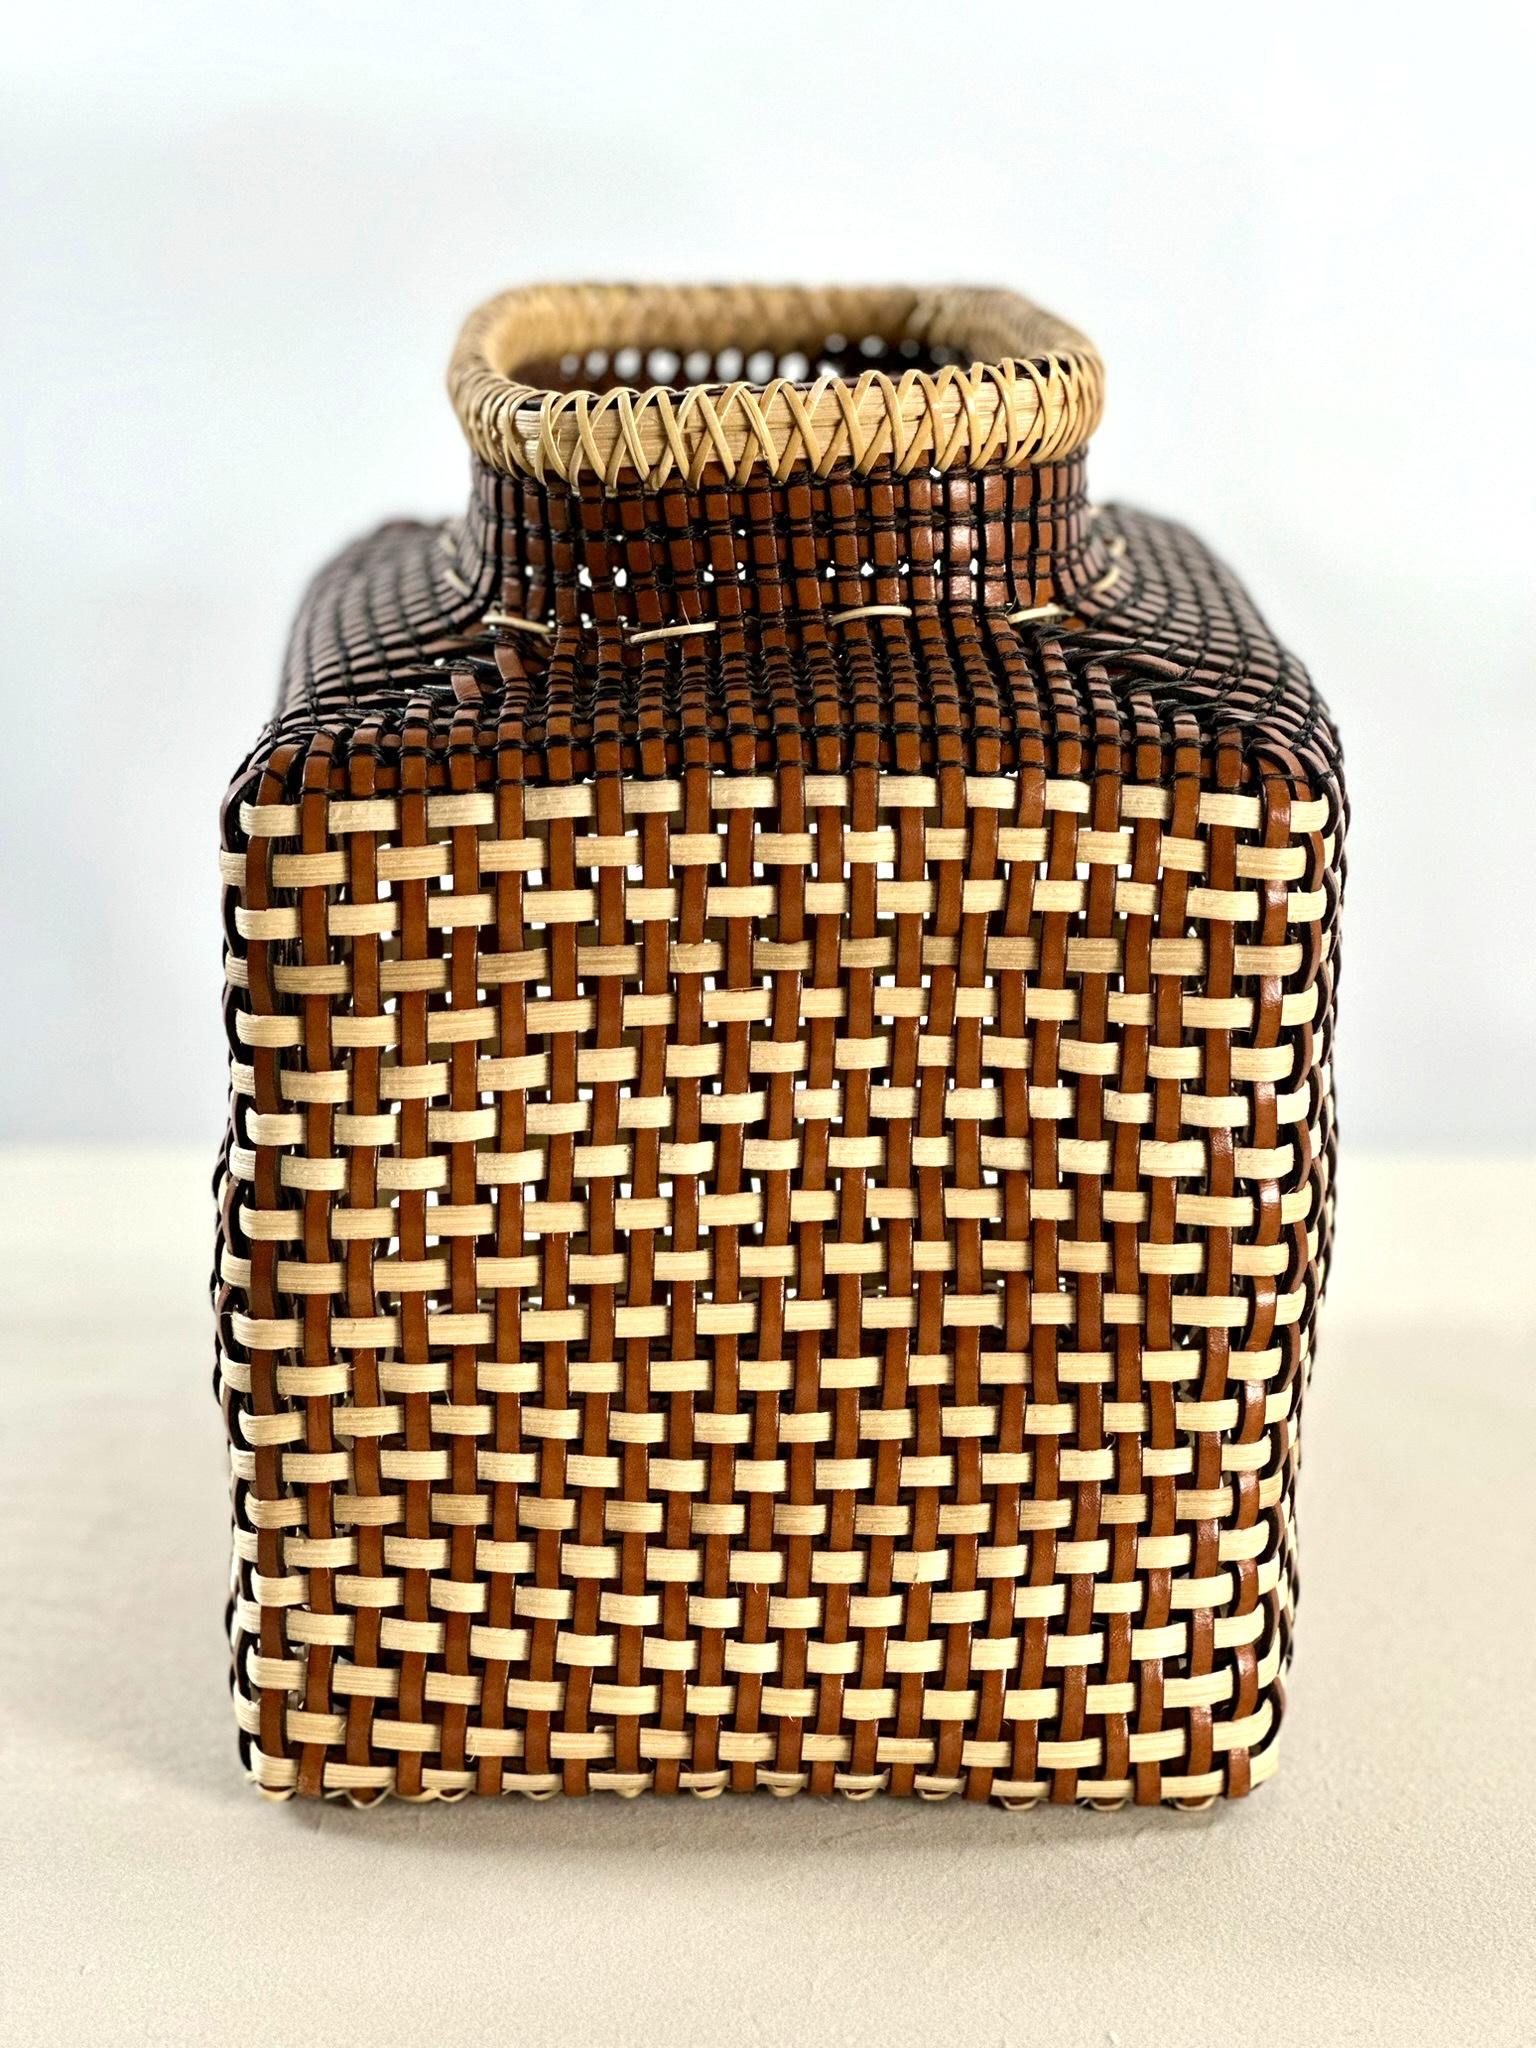 Spanish Japanese Ikebana Inspired Leather & Cane Handmade Basket Cognac Off White Color For Sale